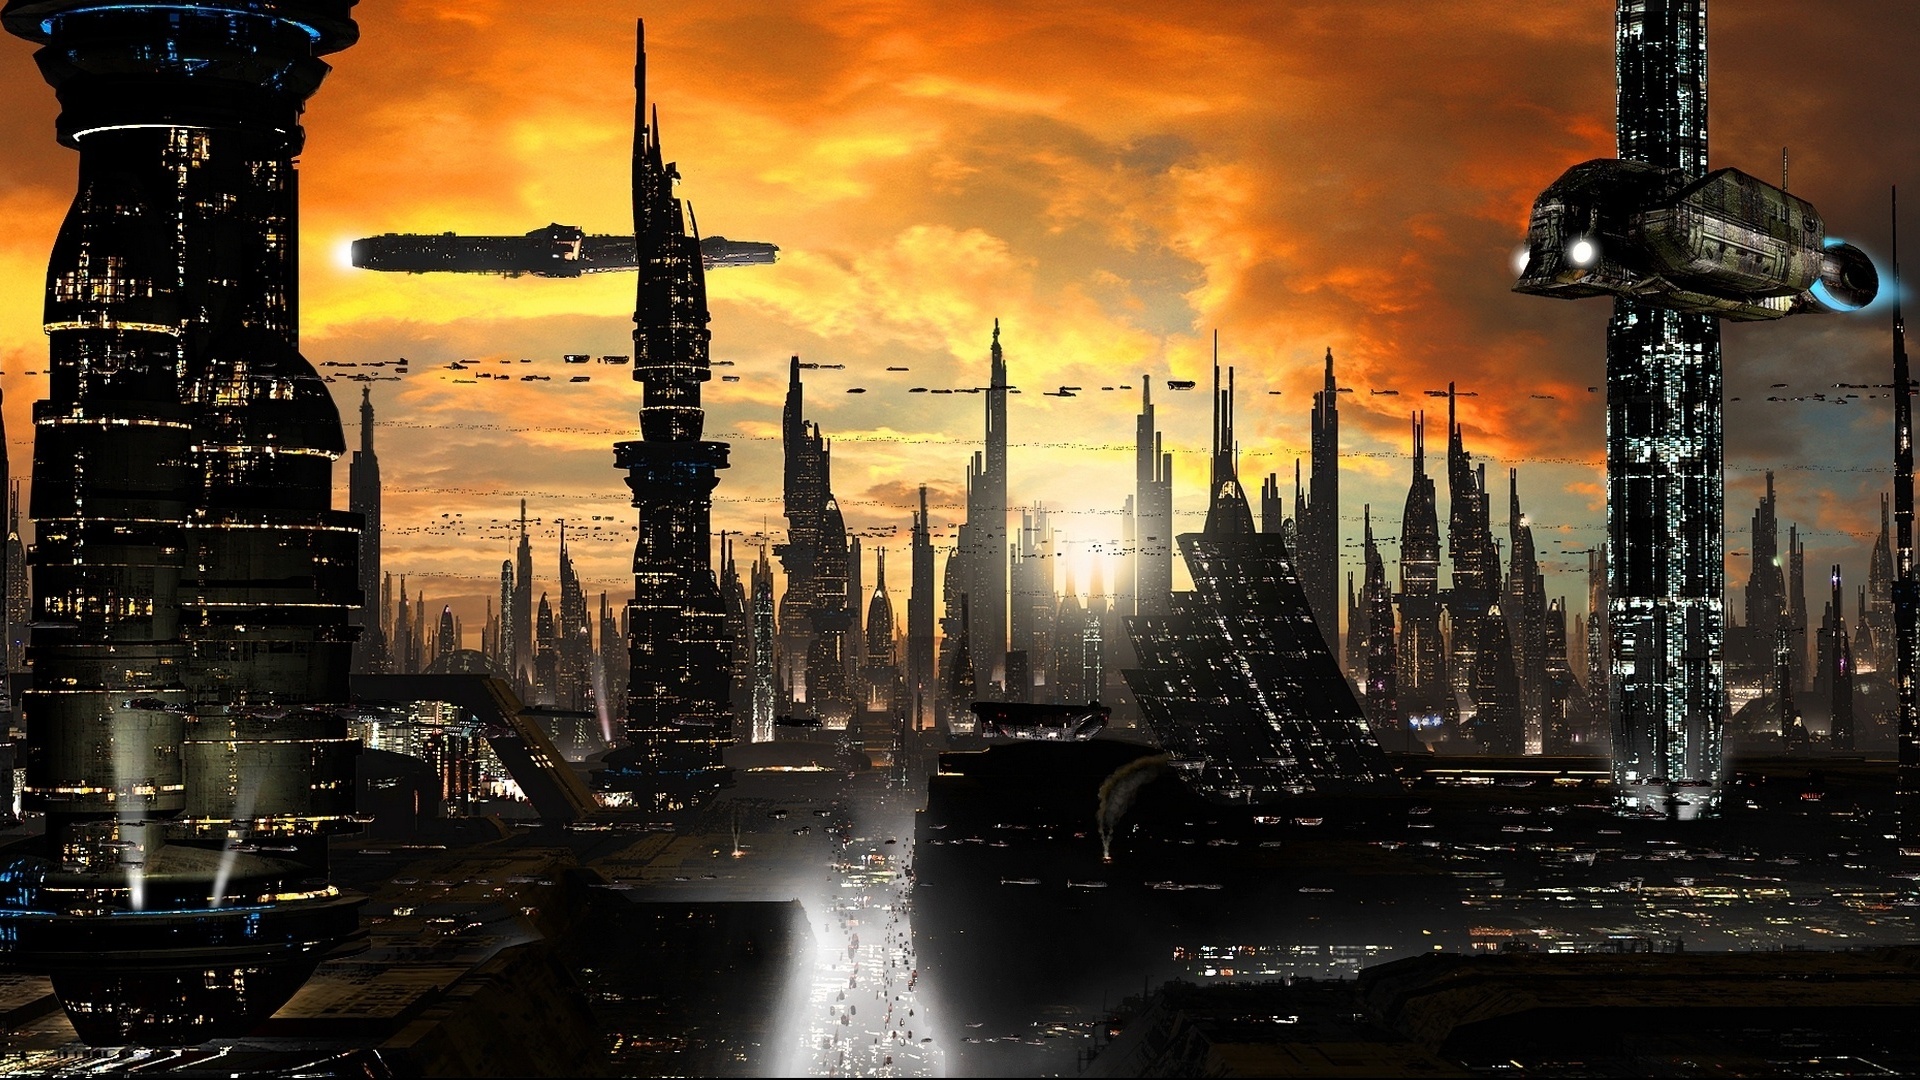 sci-fi, rich35211, scott richard, cityscape, ships, towers, planet, Futuristic city 1